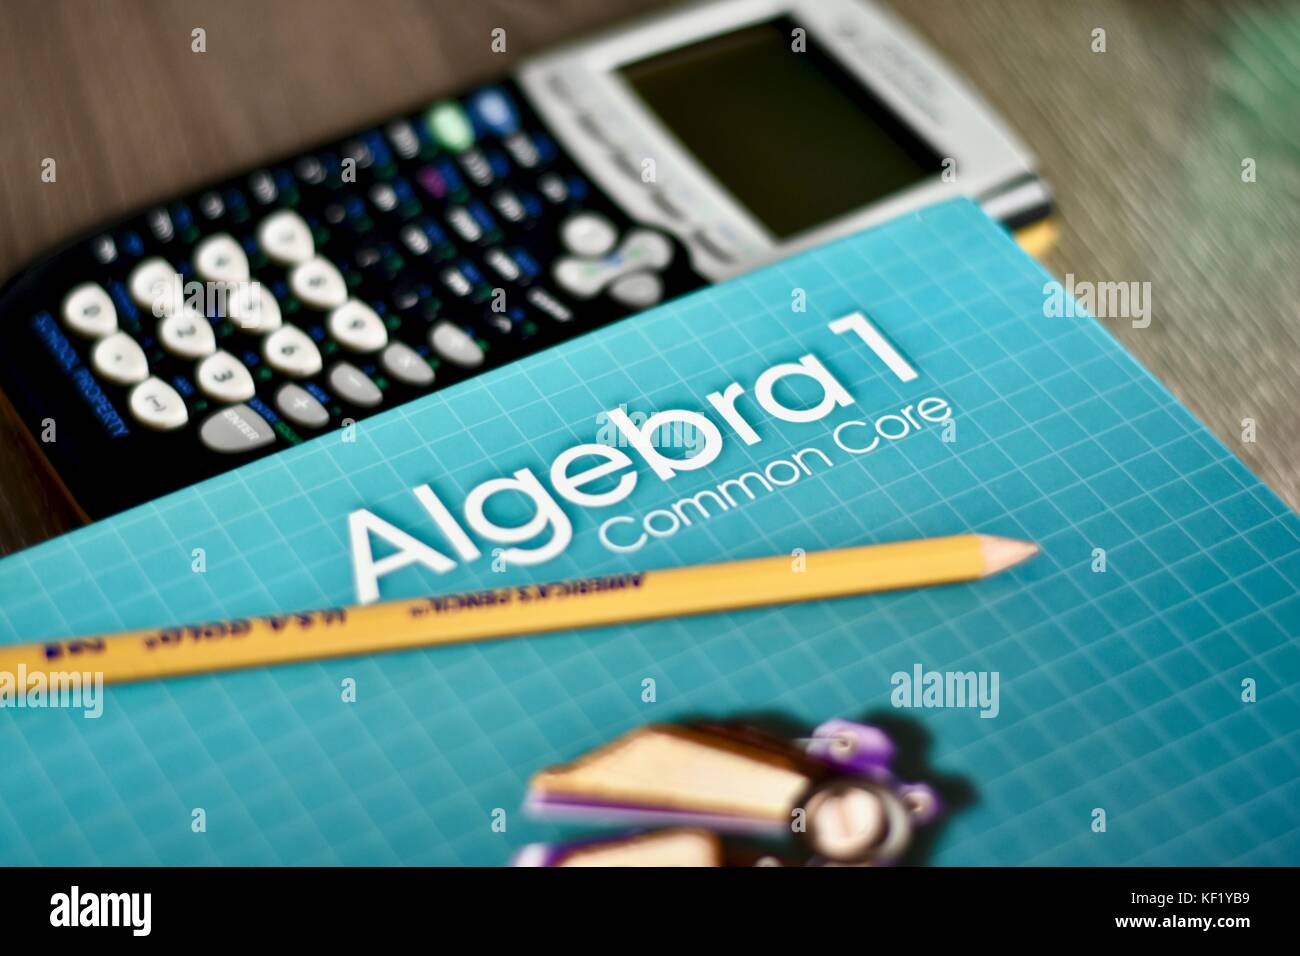 Algebra math book on desk next to classroom materials Stock Photo